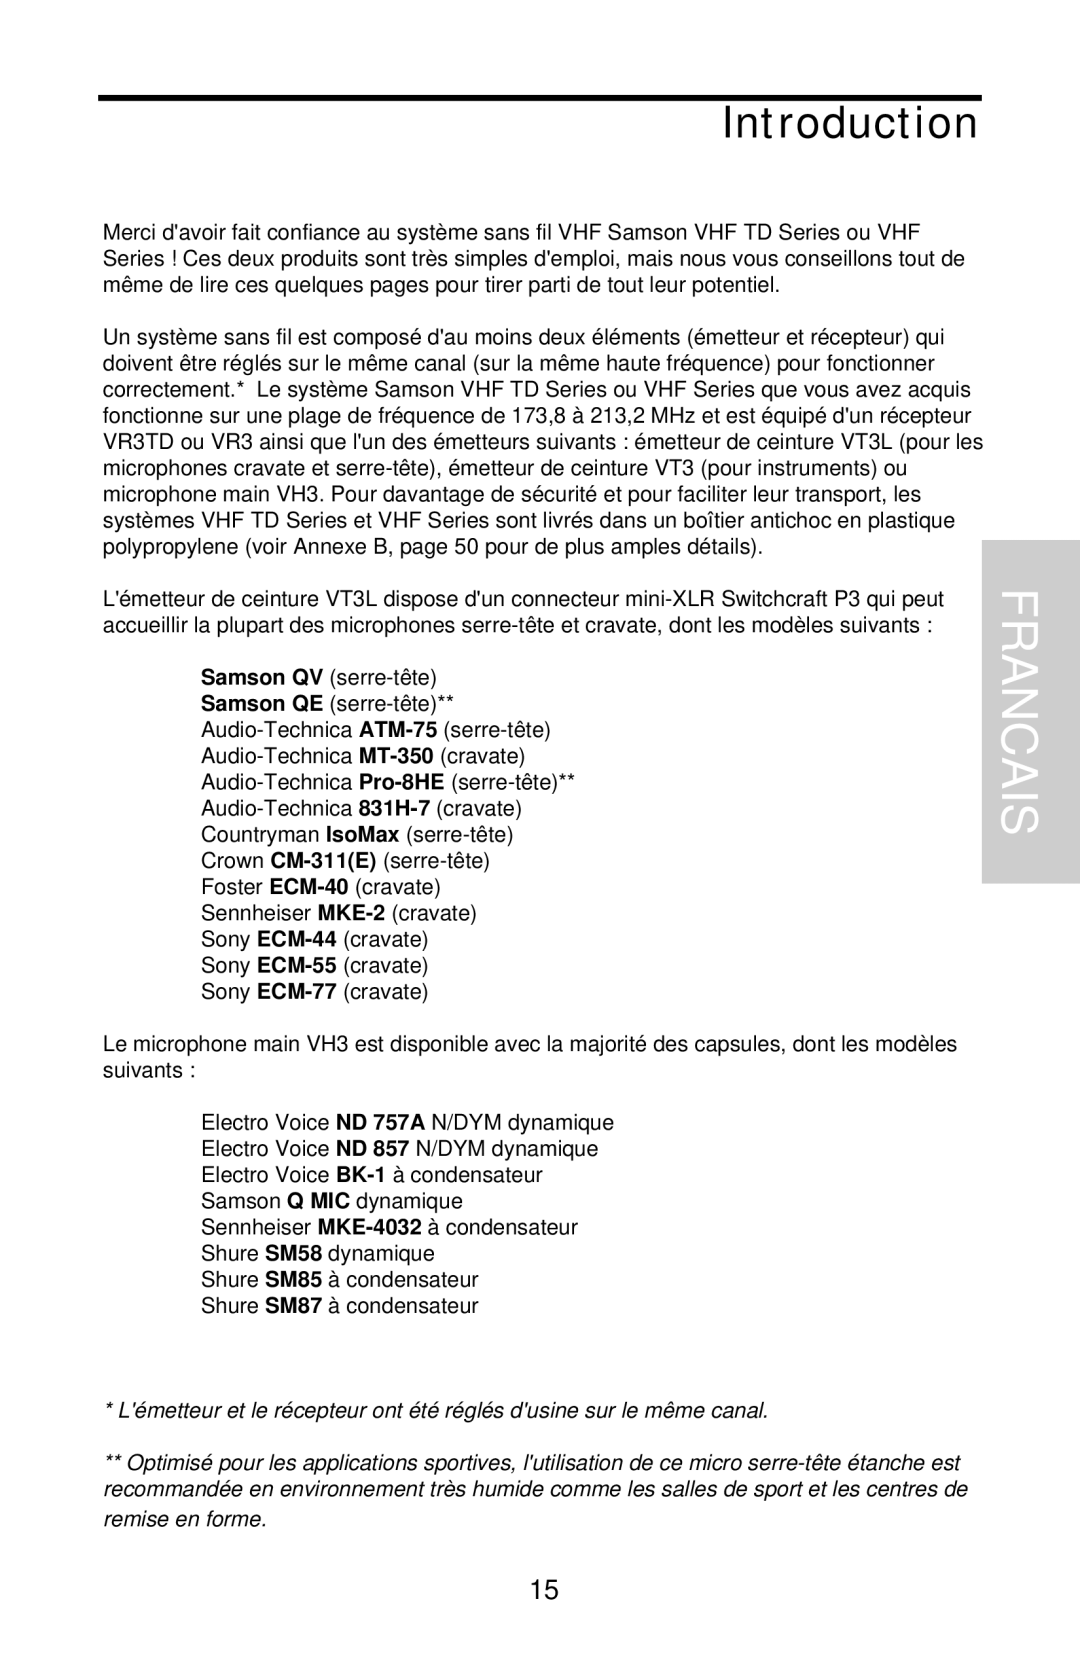 Samson VHF Series, VHF TD Series owner manual Francais, Introduction 